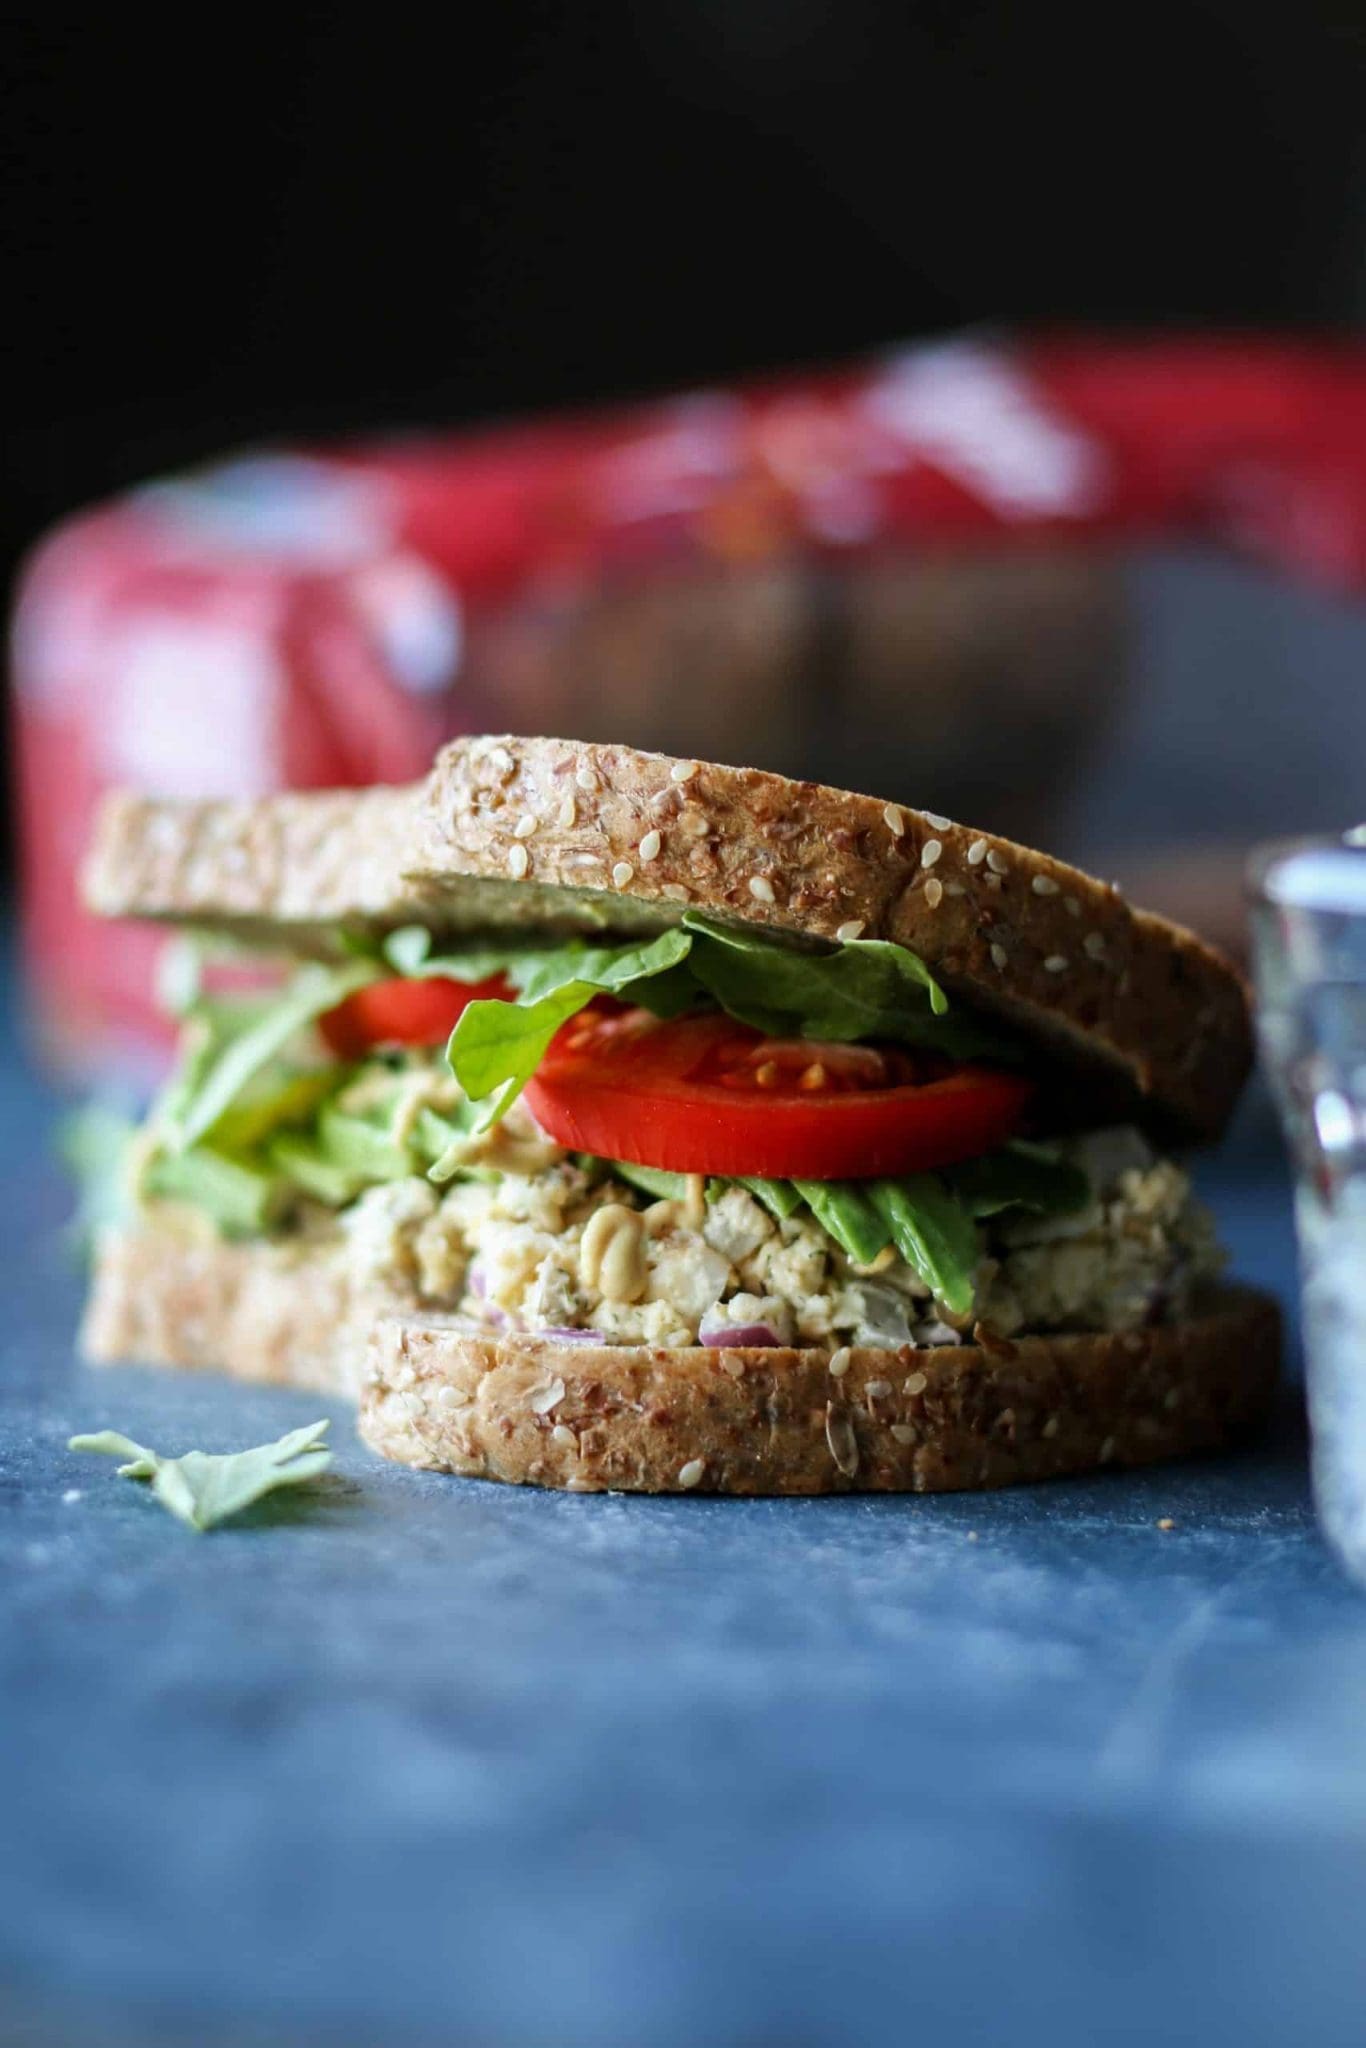 veggie sandwich from the side